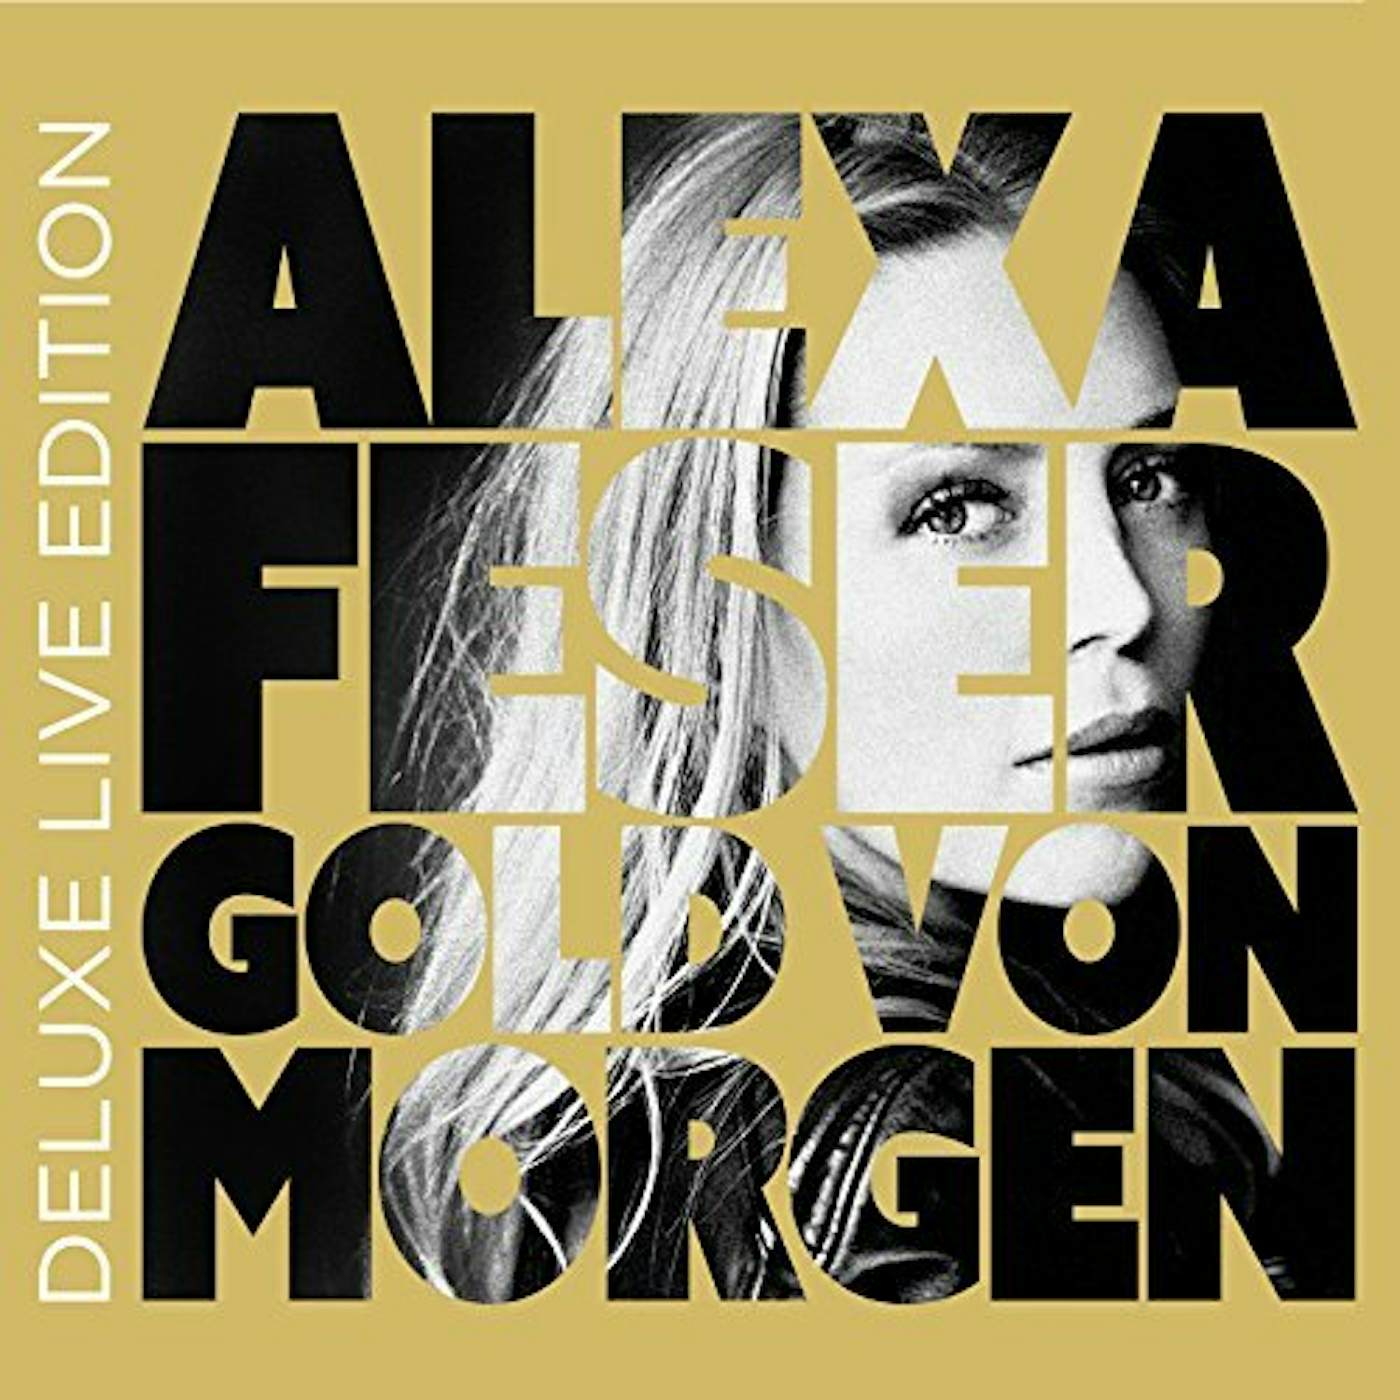 Alexa Feser GOLD VON MORGEN: 2CD DELUXE LIVE EDITION CD